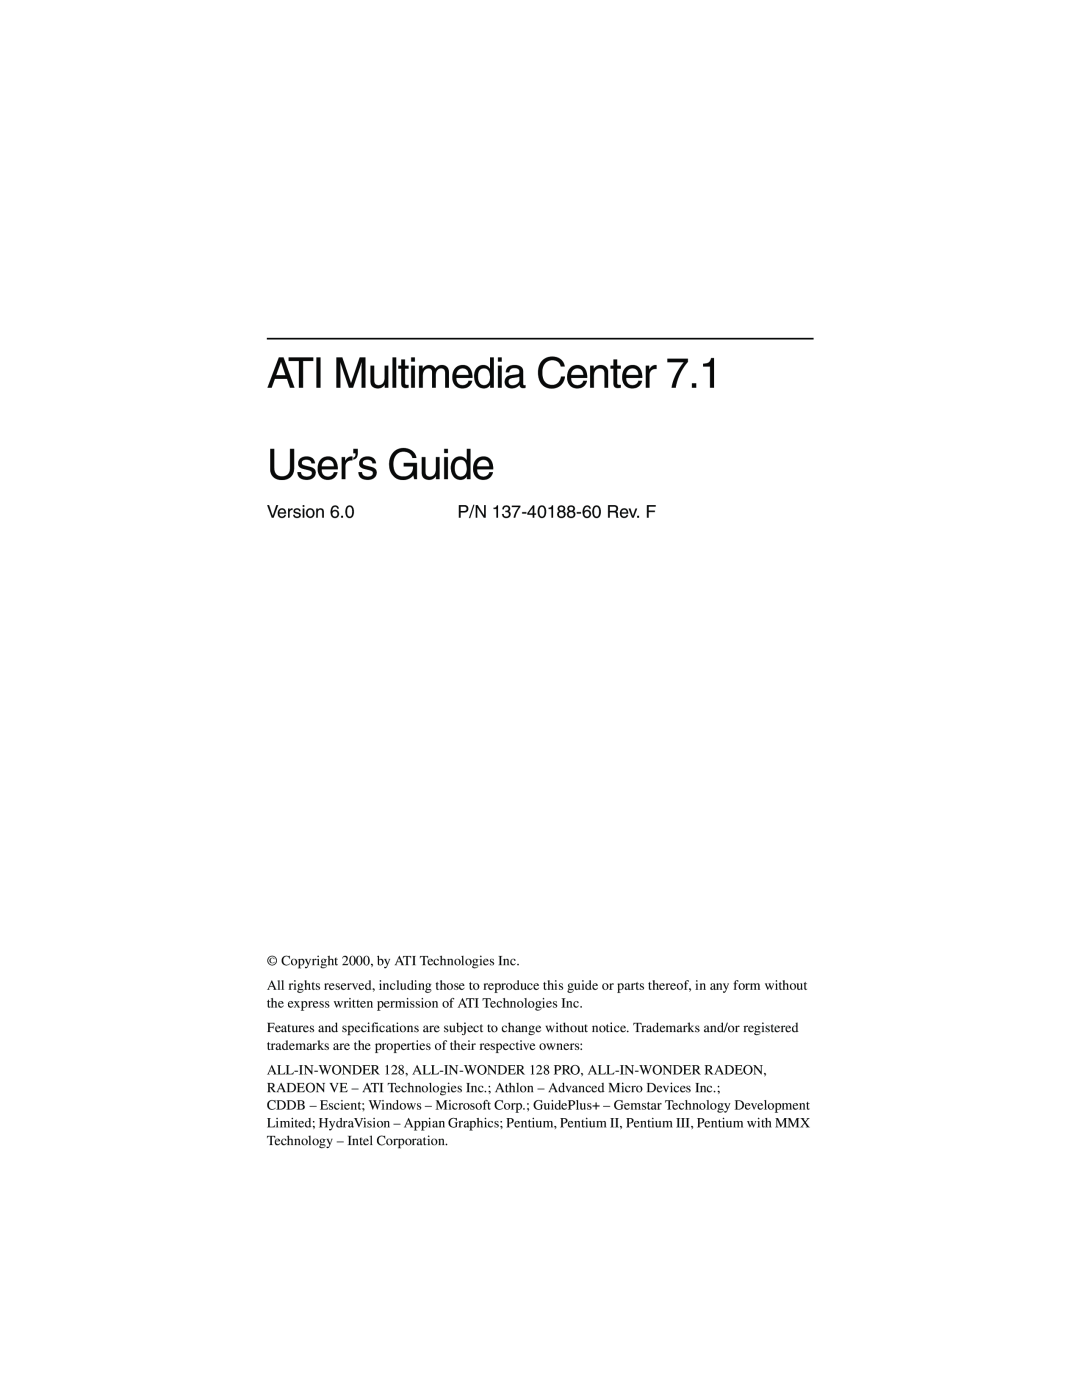 ATI Technologies specifications ATI Multimedia Center User’s Guide, Version, P/N 137-40188-60Rev. F 